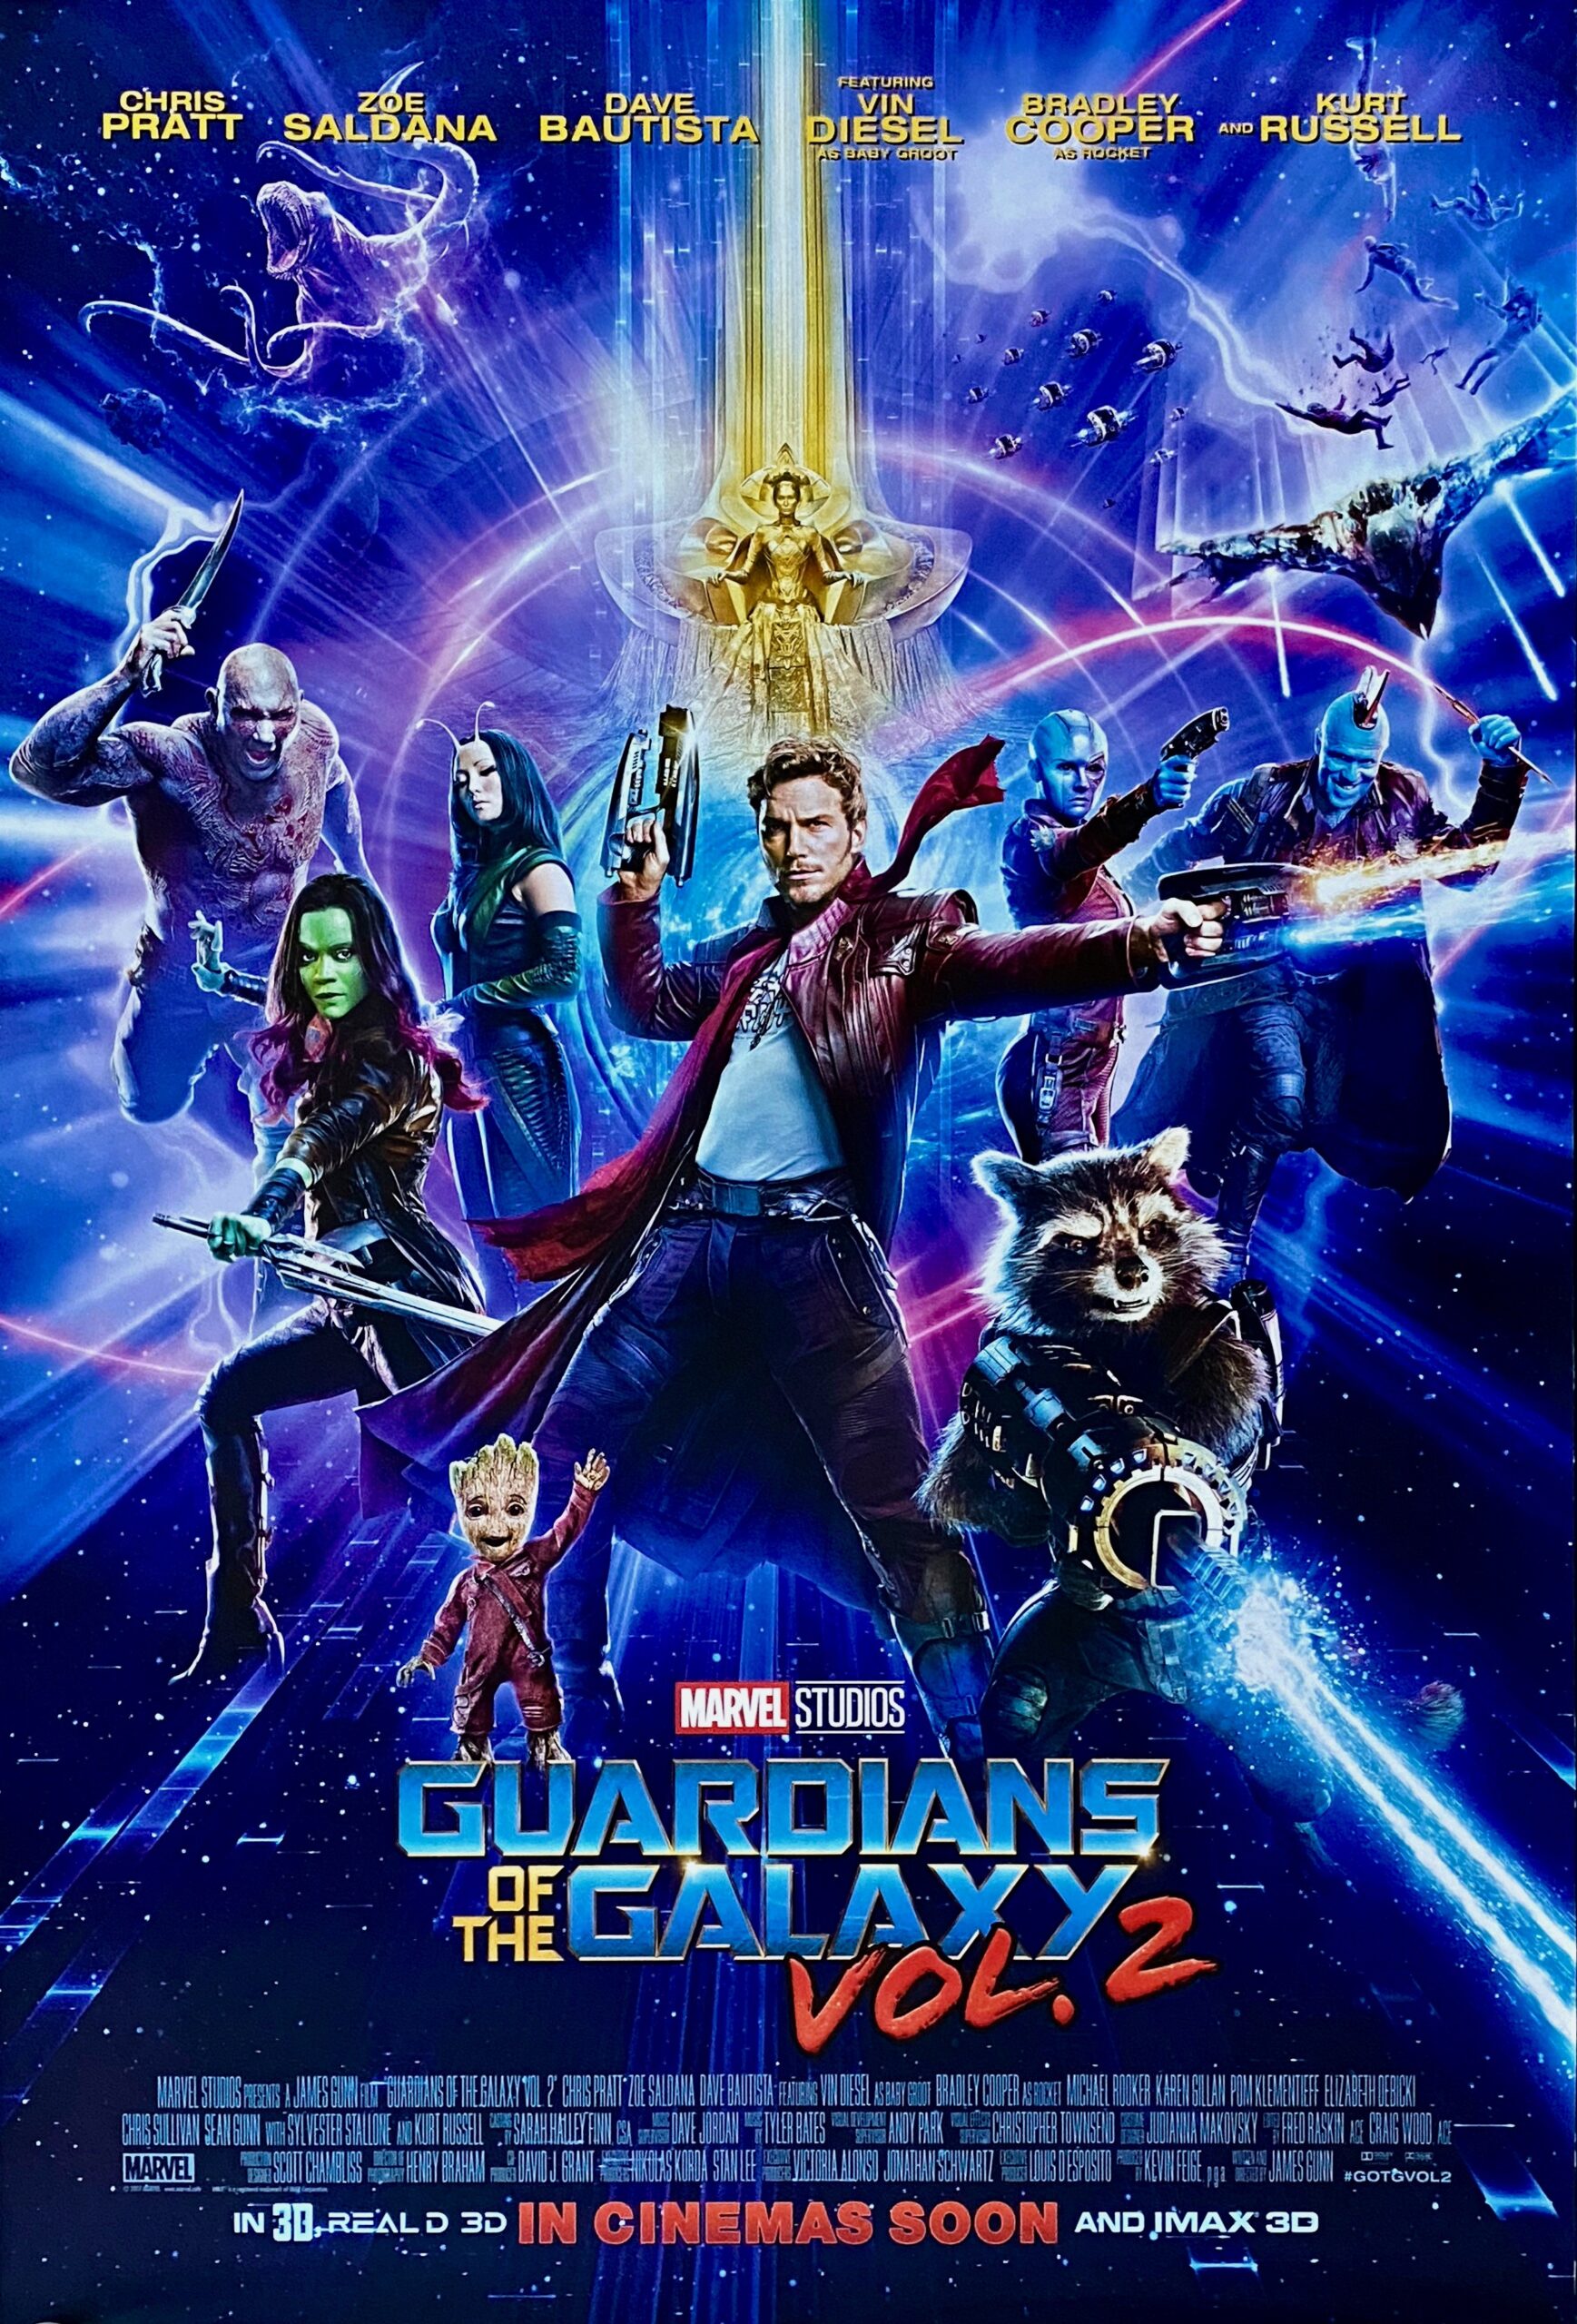  Guardians of the Galaxy Vol. 2 : Chris Pratt, Bradley